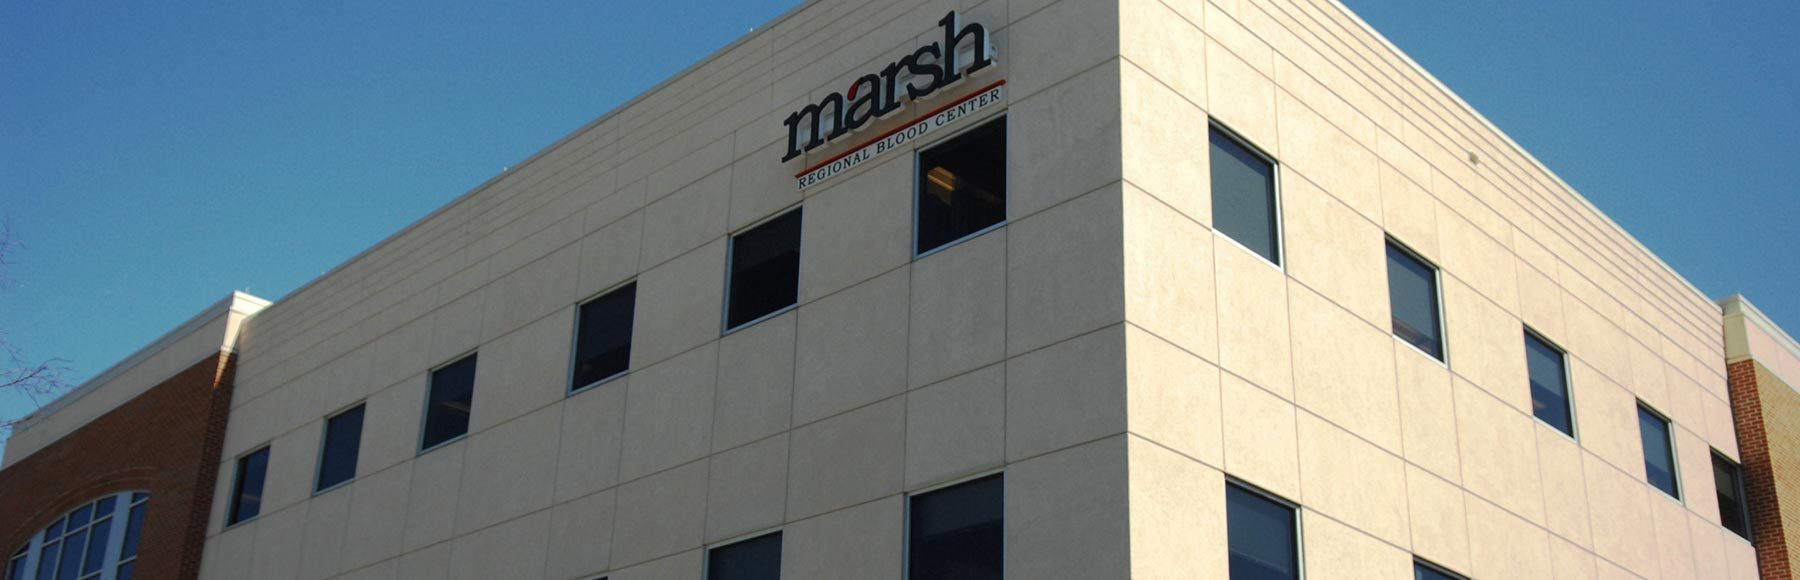 Building exterior of Marsh Regional's Kingsport donation center